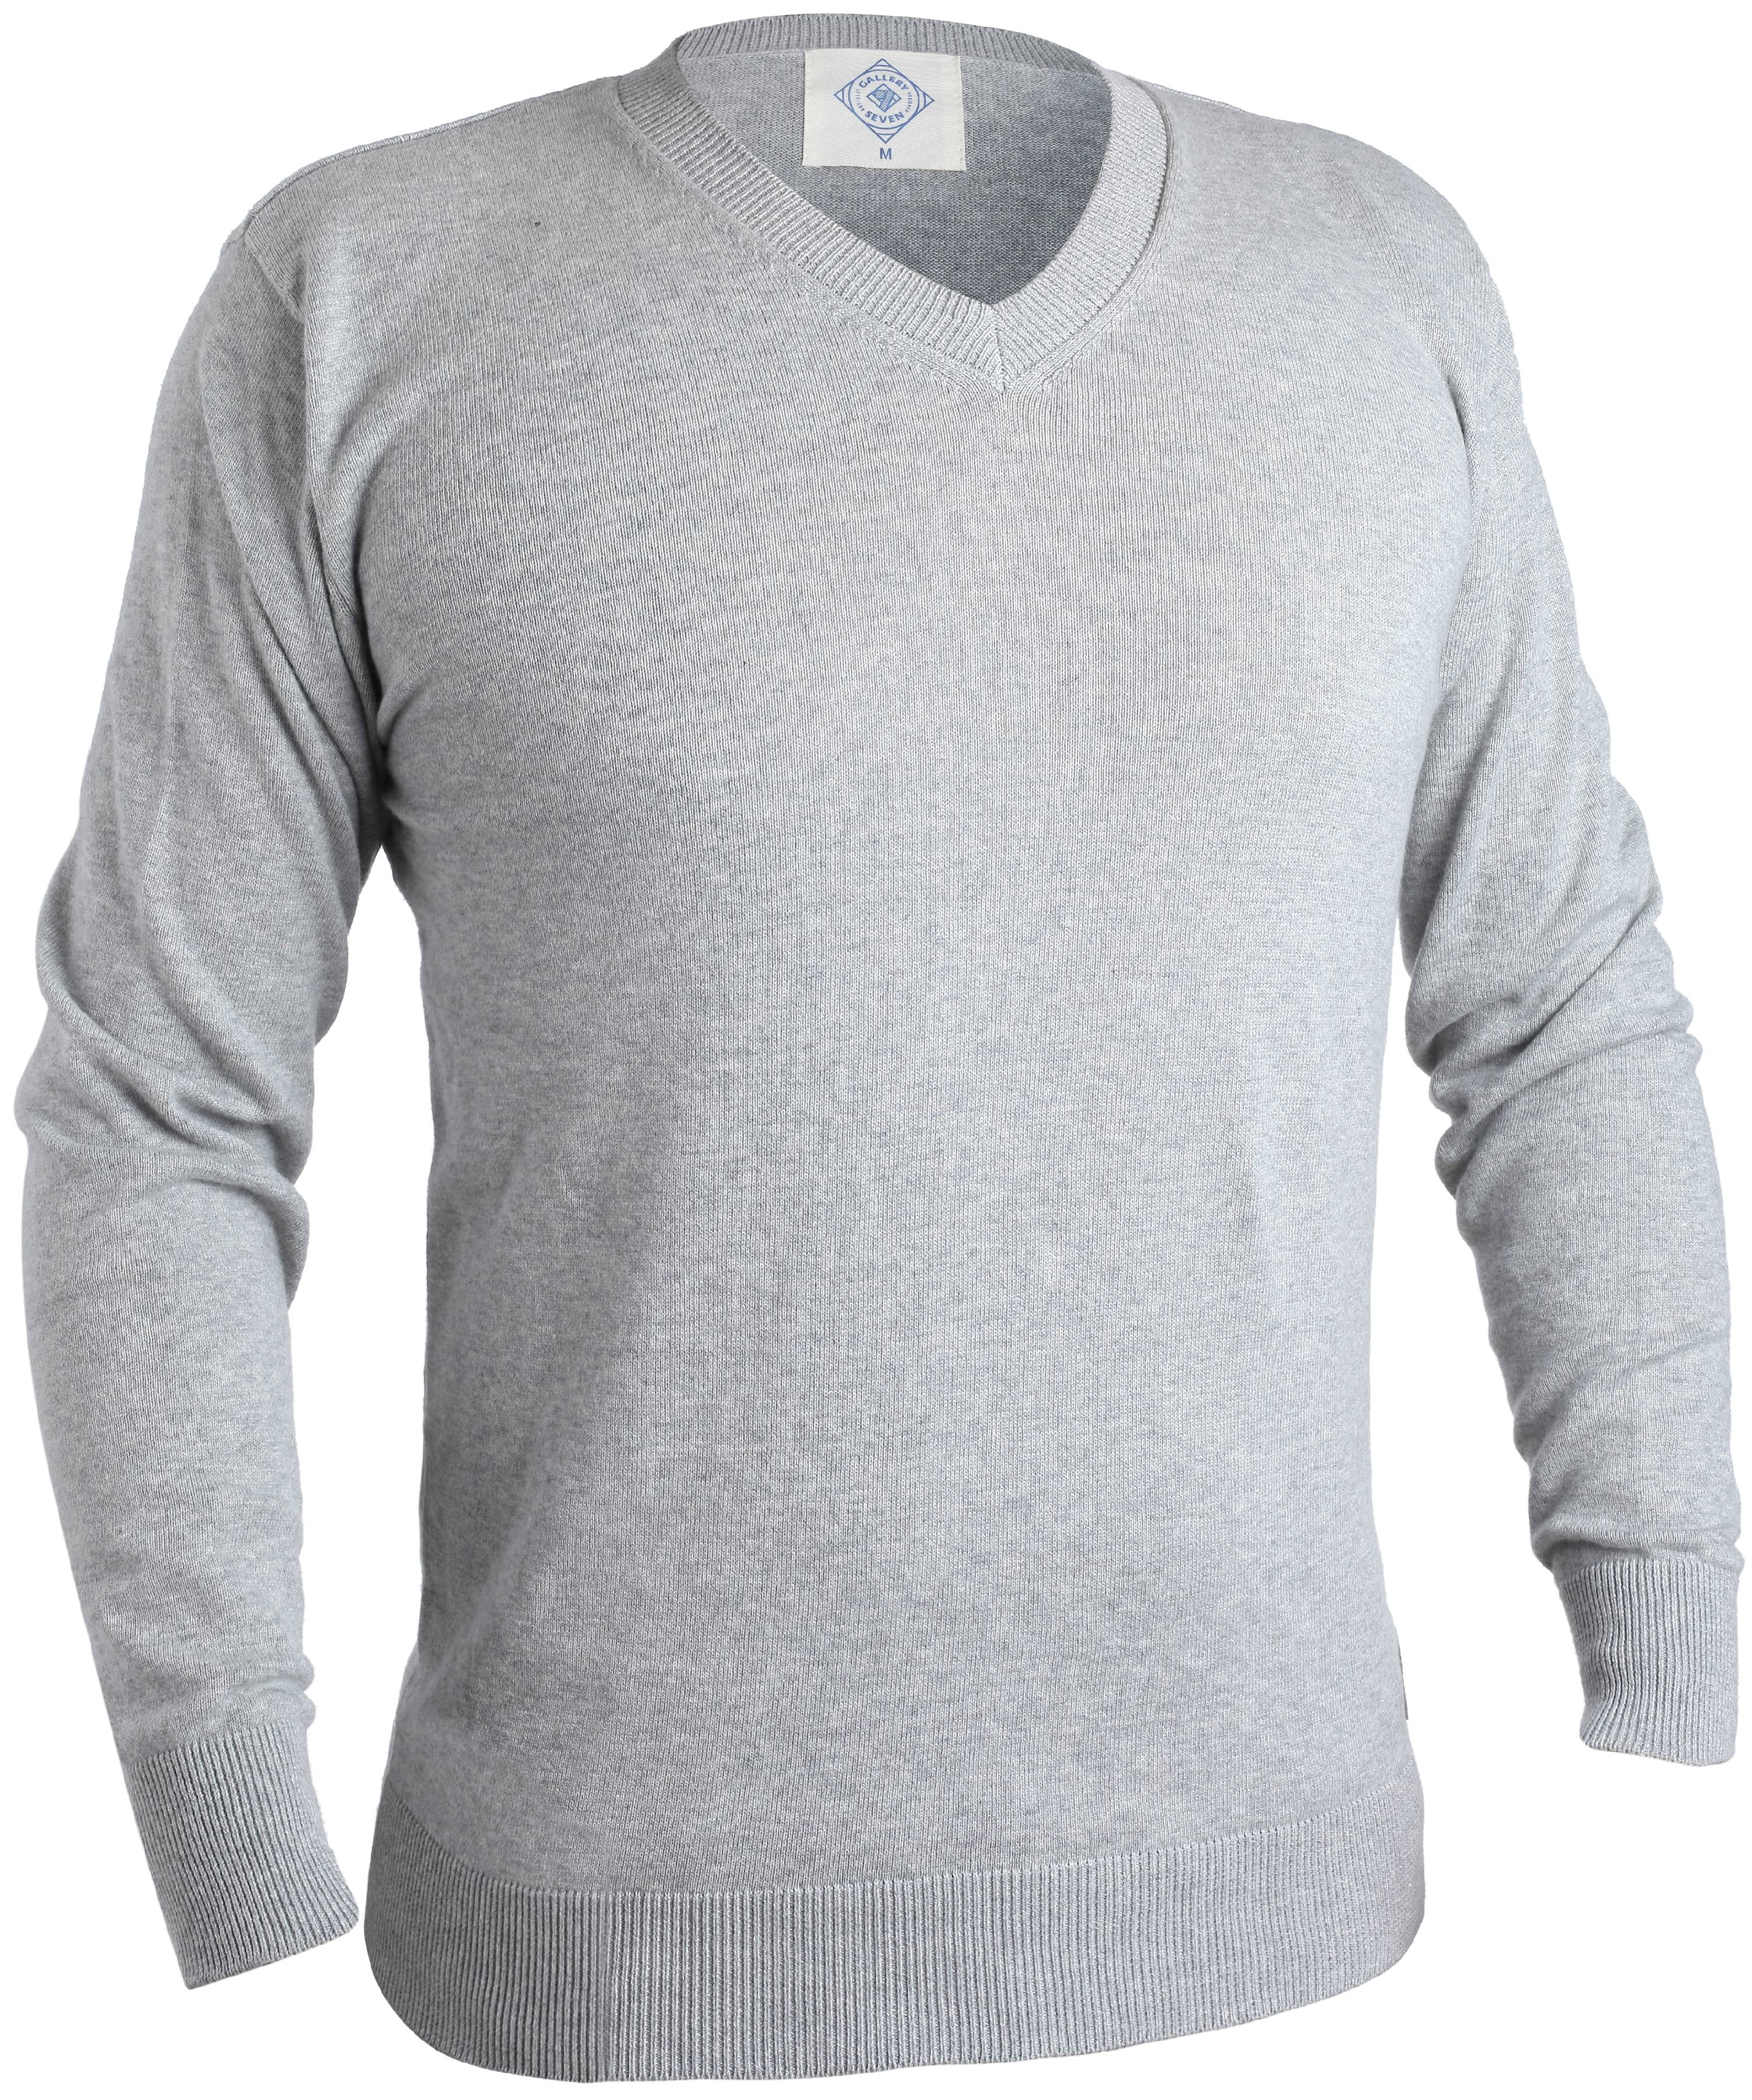 Gallery Seven V Neck Sweater For Men - Cotton Lightweight Mens Pullover ...